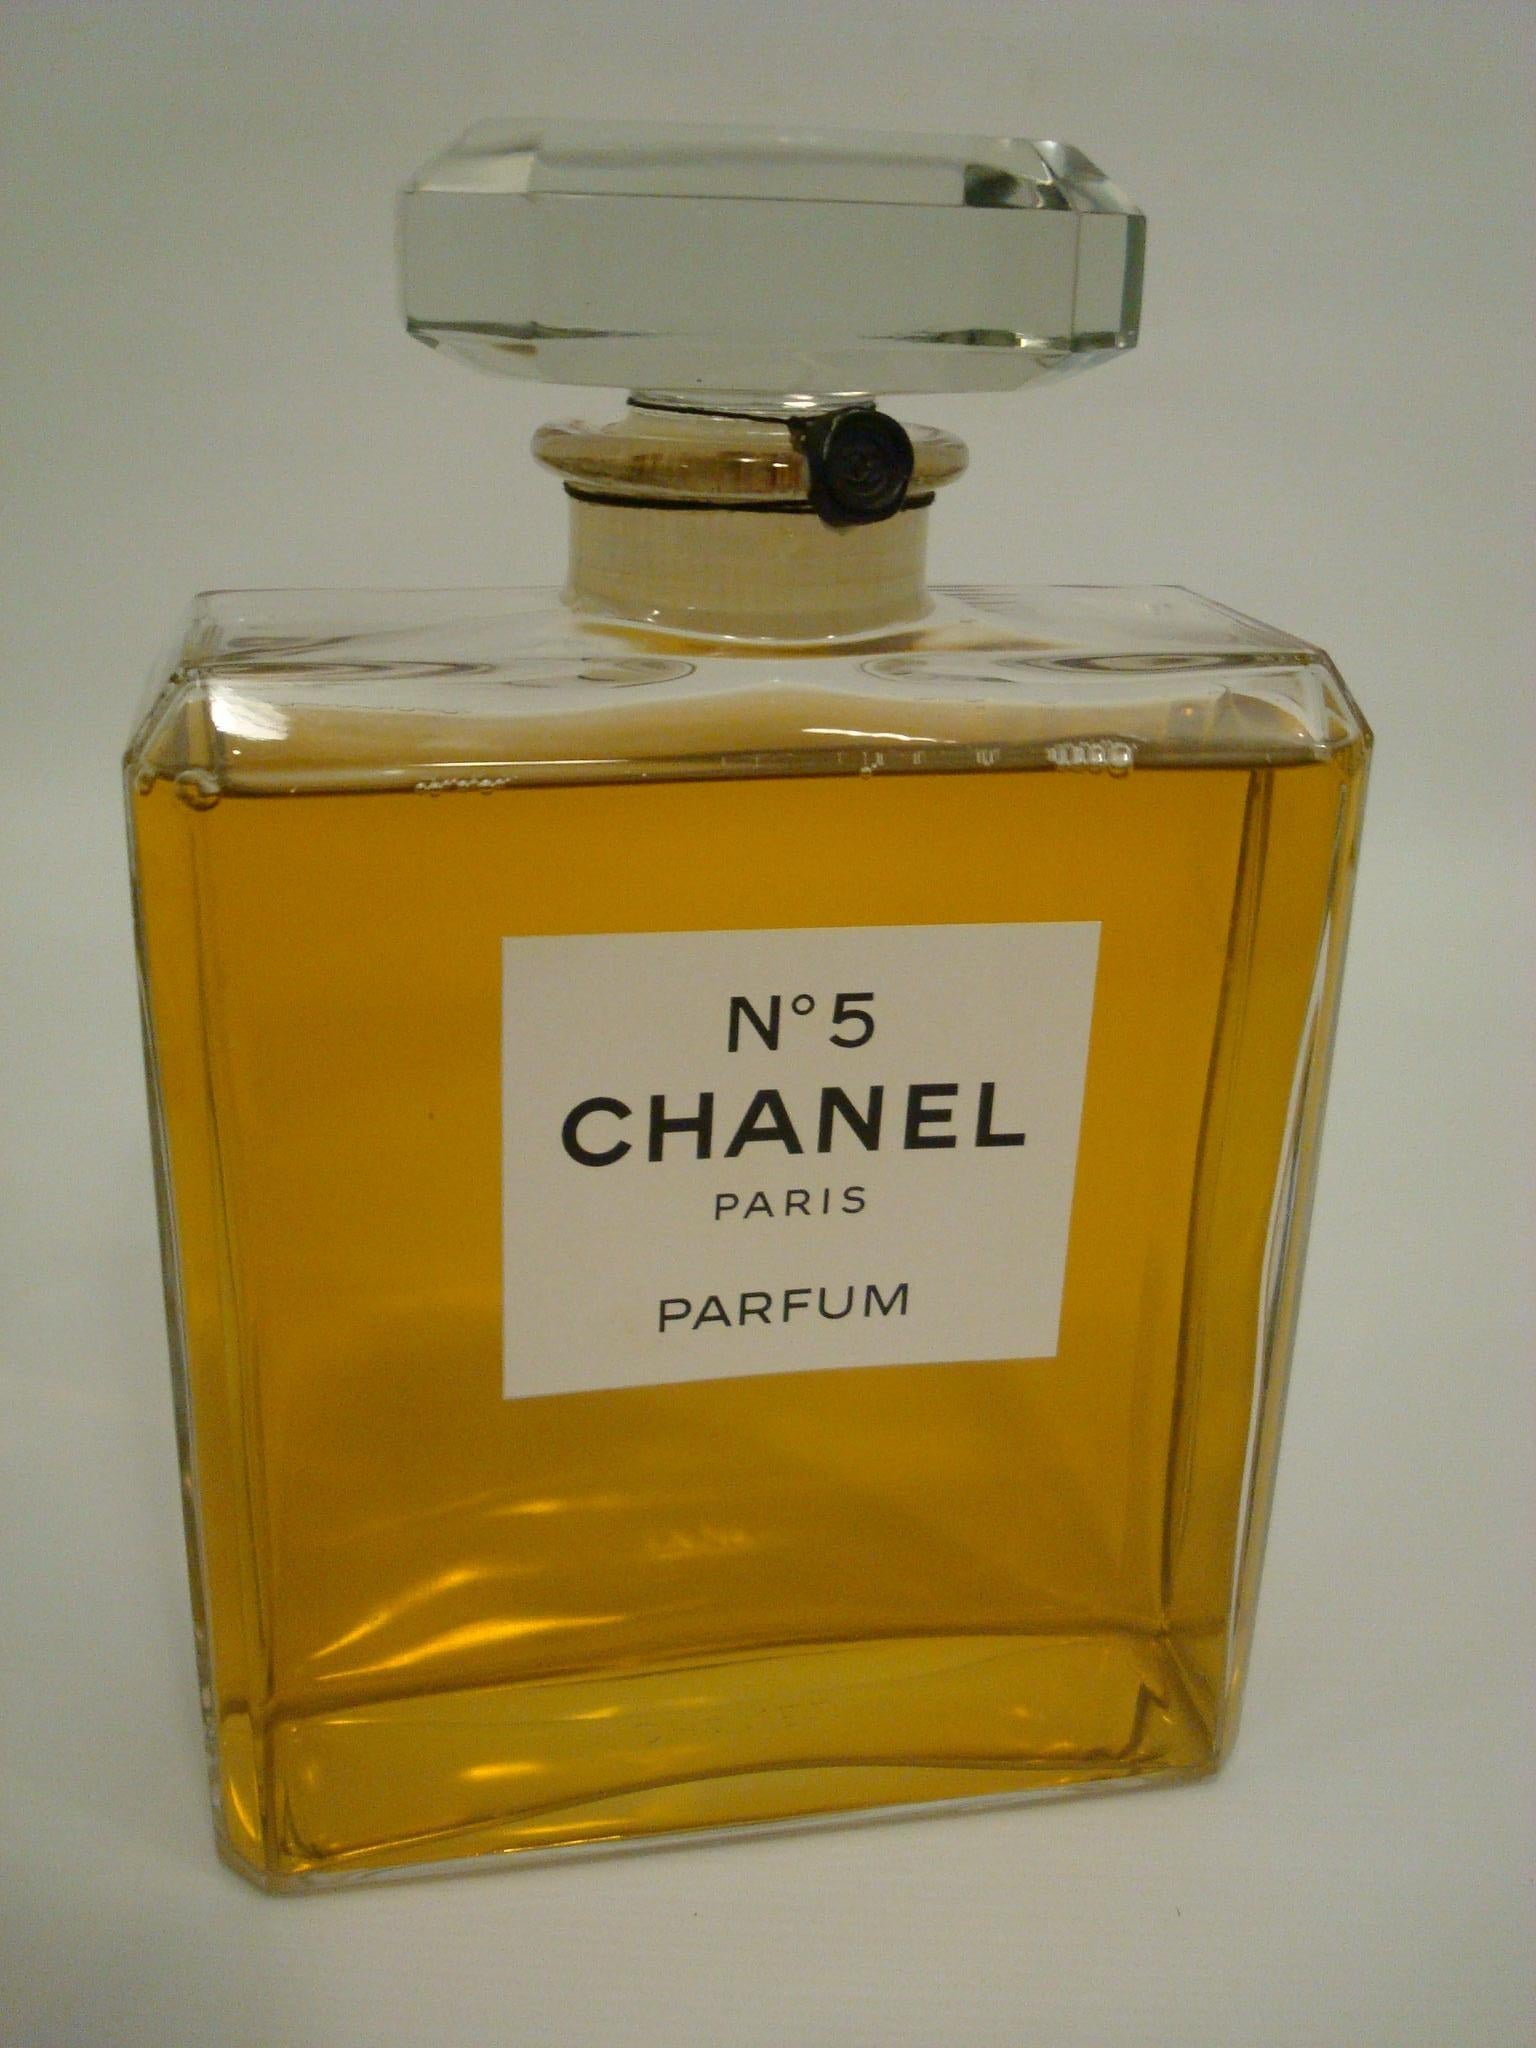 Chanel N5 Huge Store Display Perfume Bottle Advertising, France, 20th Century 4